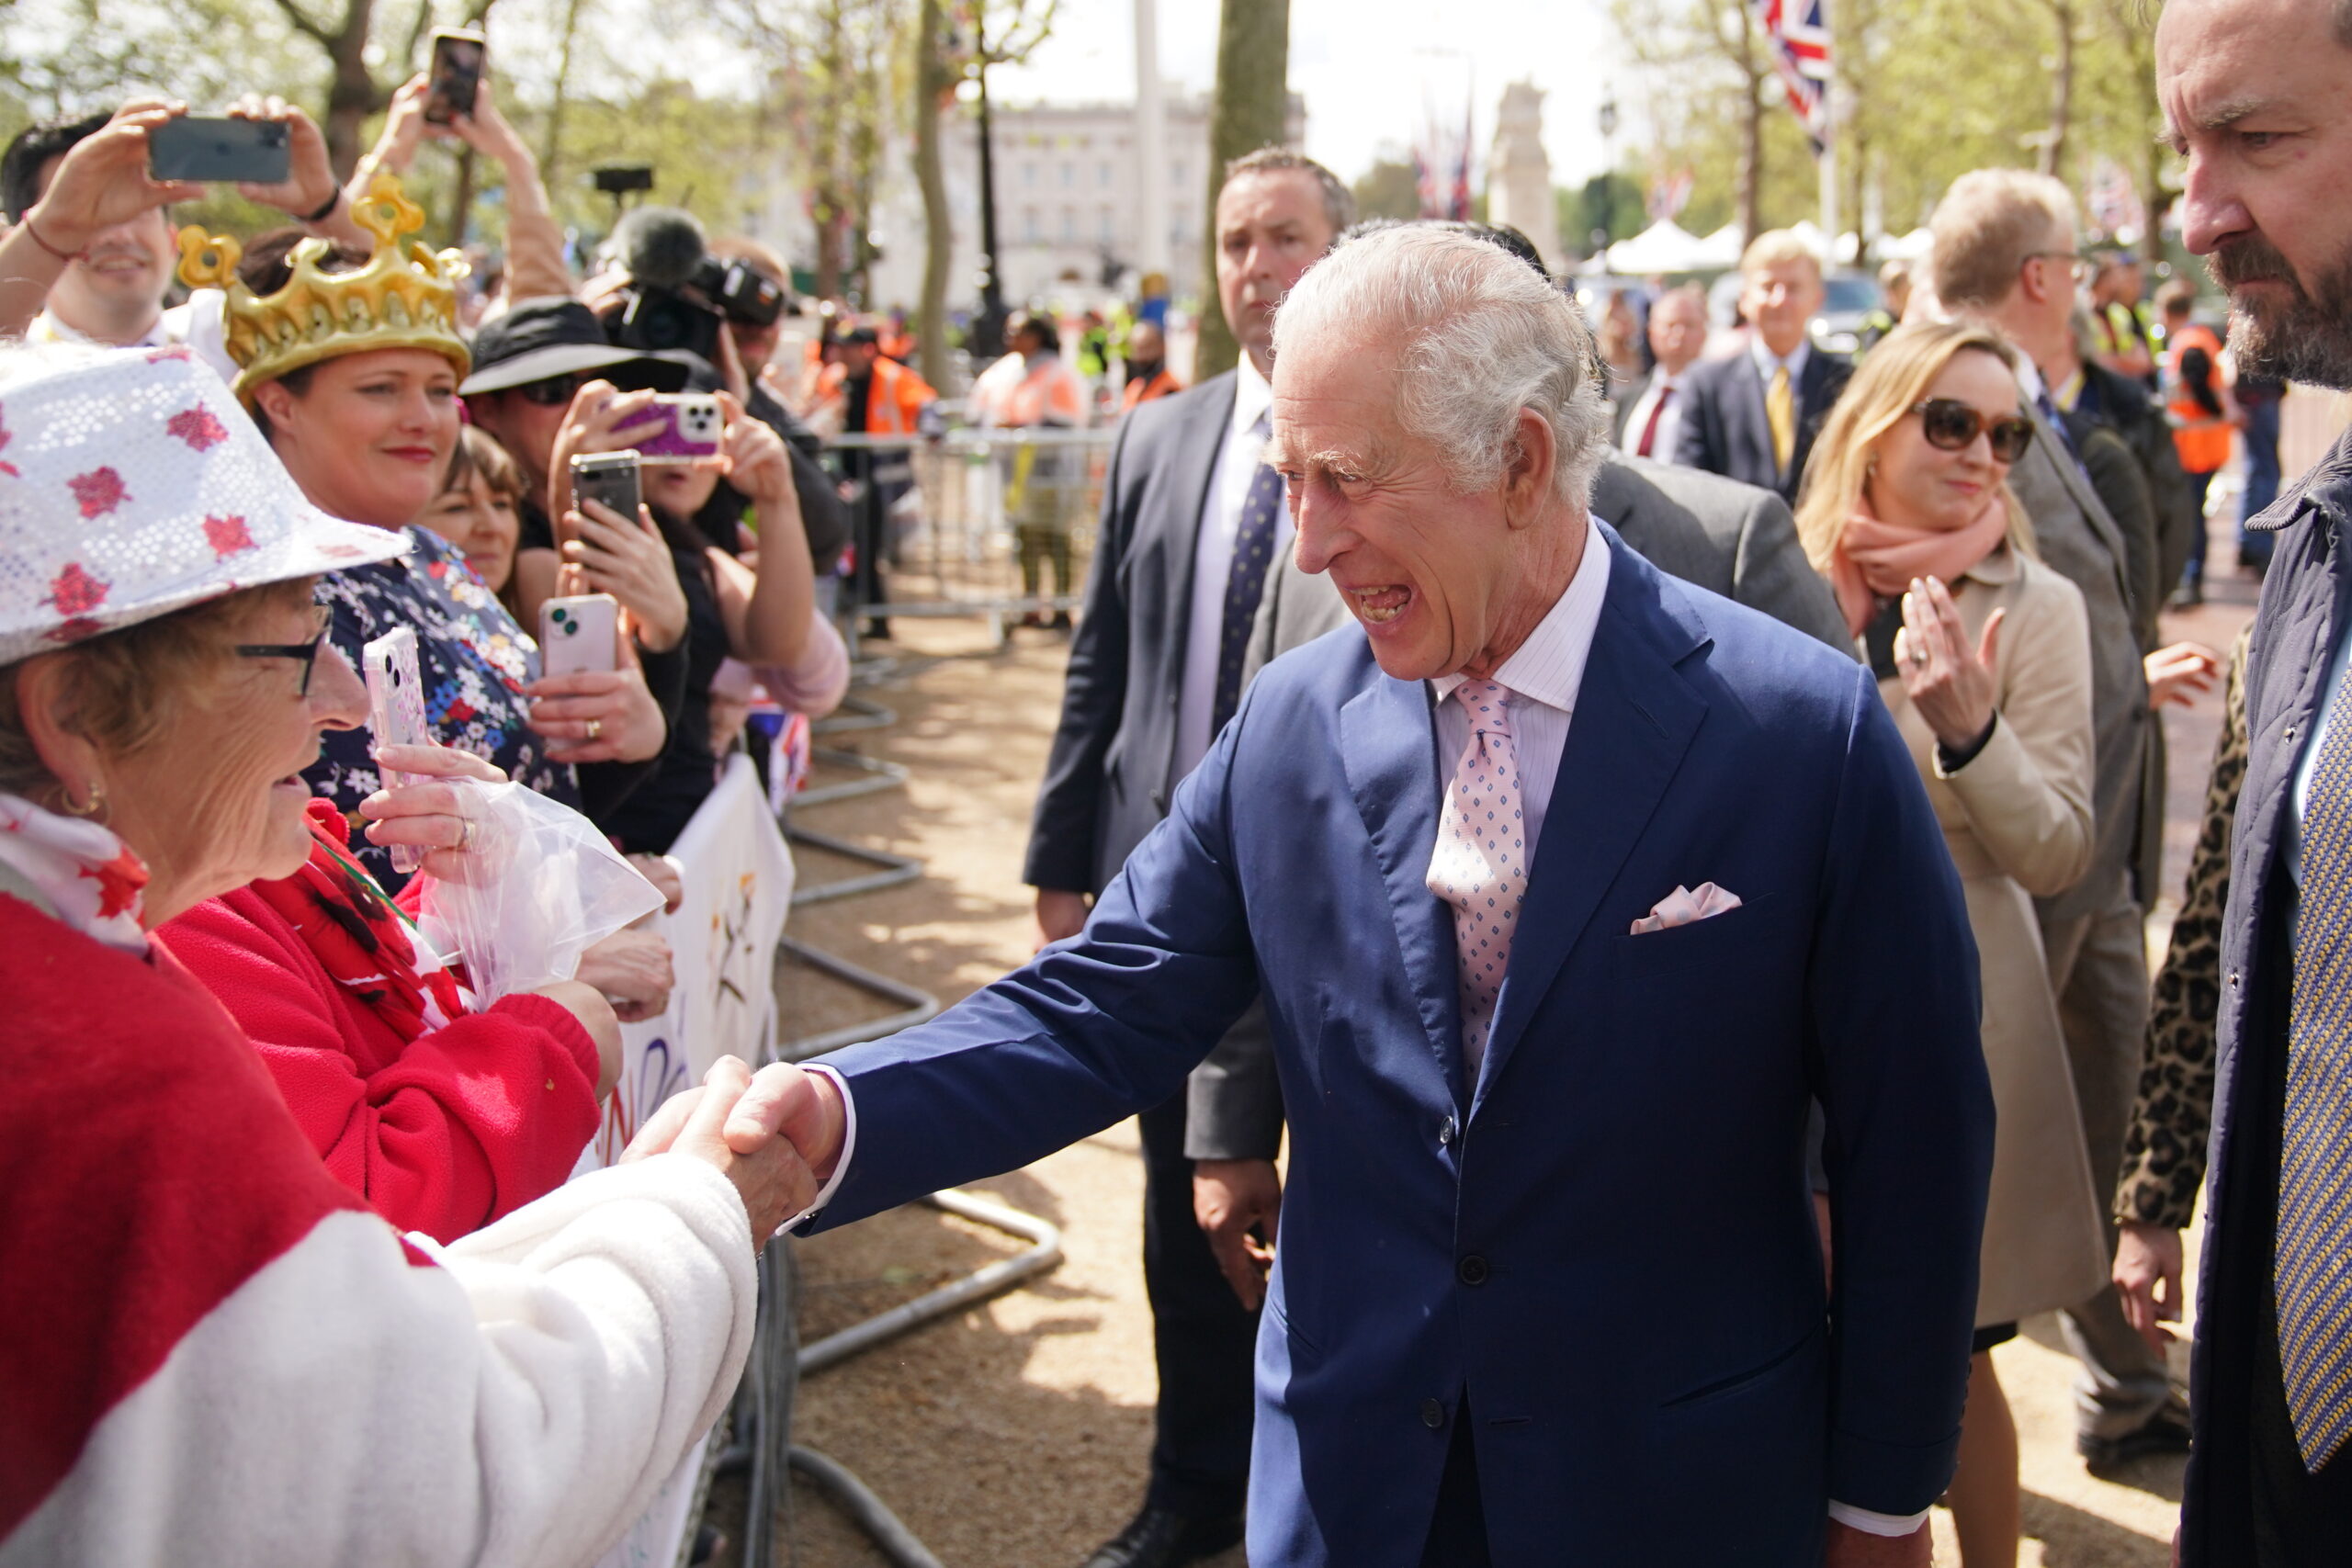 König Charles III. begrüßt Gratulanten bei einem Rundgang vor dem Buckingham Palast.